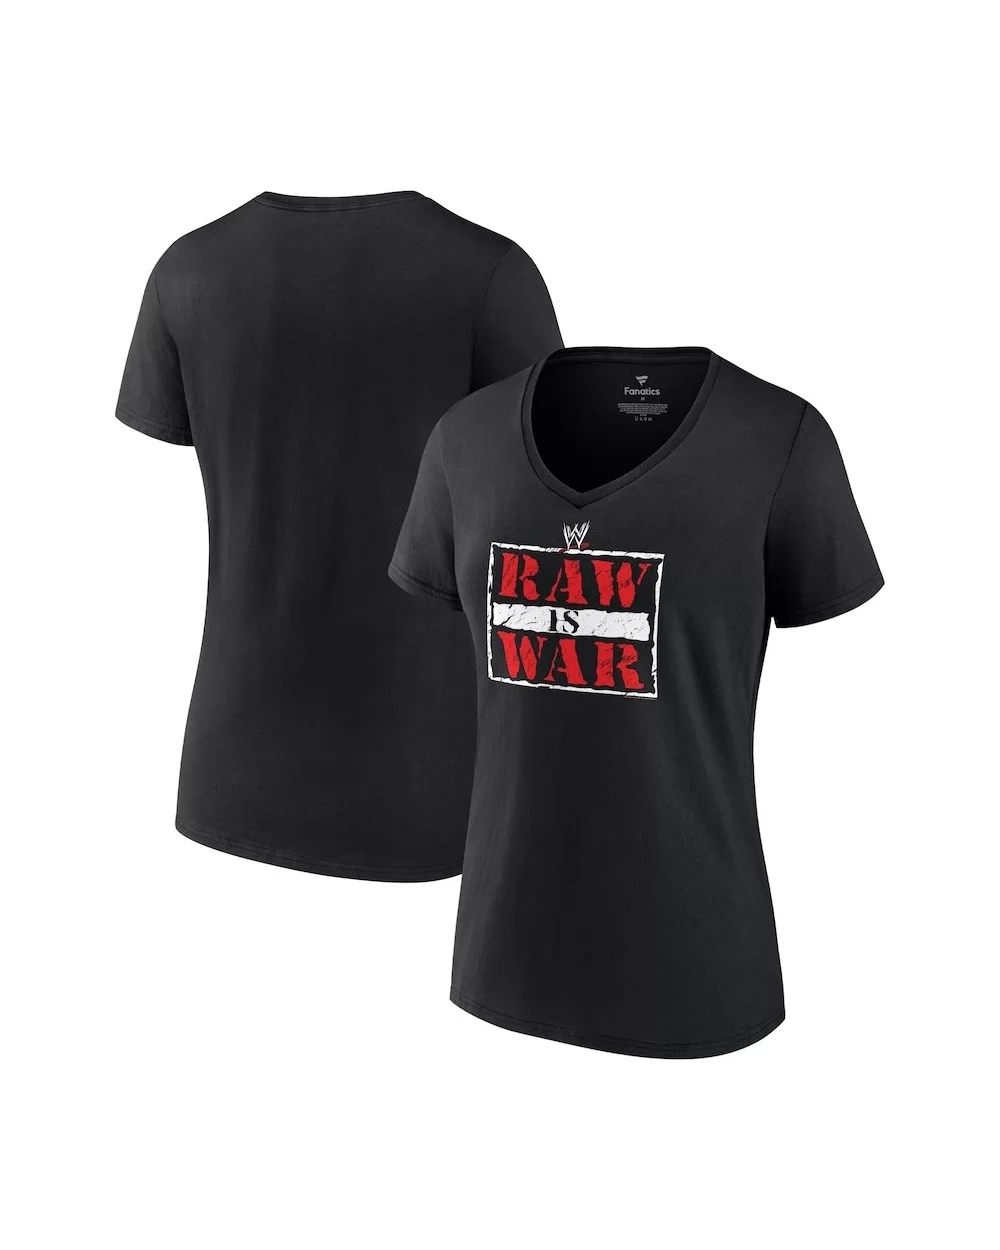 Women's Fanatics Branded Black WWE RAW is War Retro Logo V-Neck T-Shirt $7.44 T-Shirts